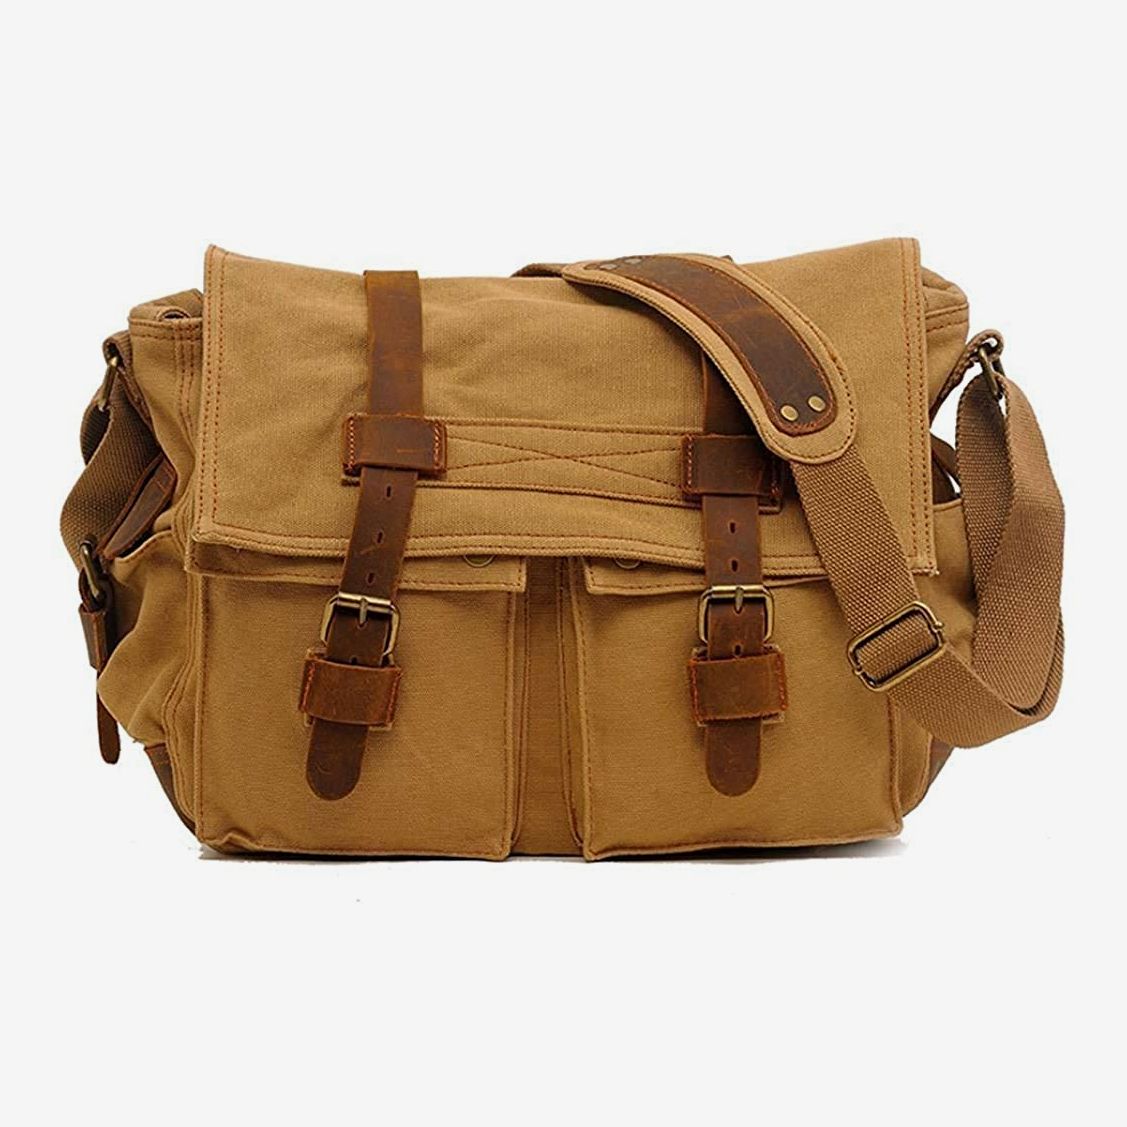 Plambag Canvas Messenger Bag Small Travel School Crossbody Bag Fit iPad Coffee